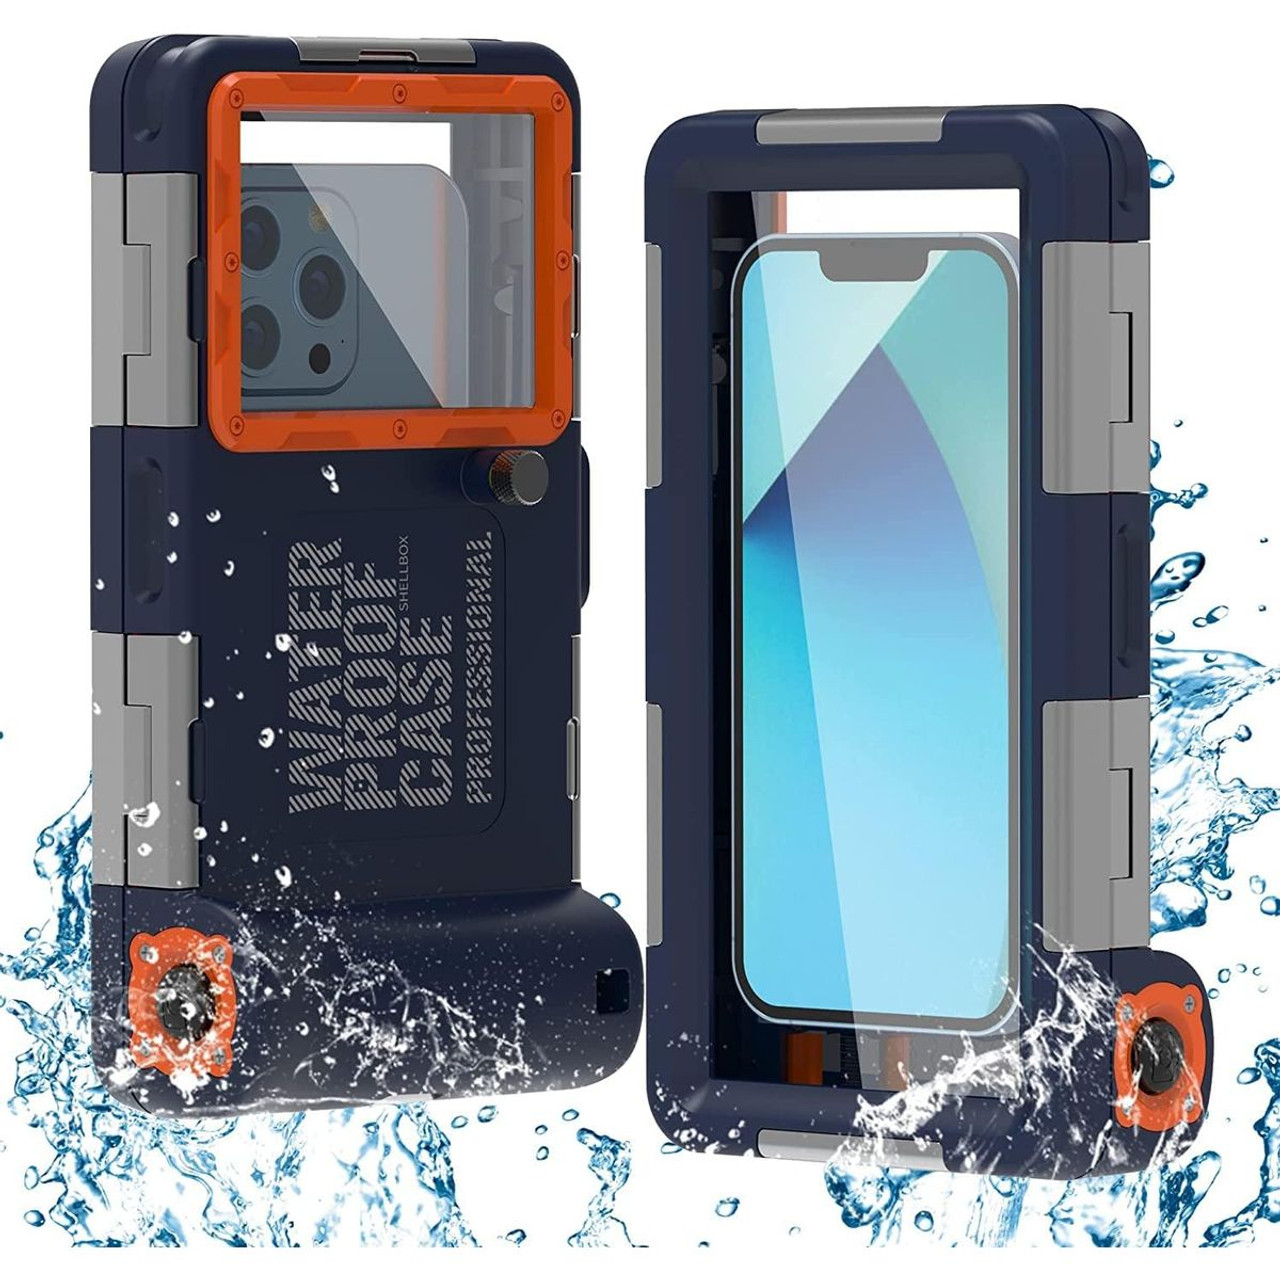 Extreme Waterproof Underwater Phone Case product image